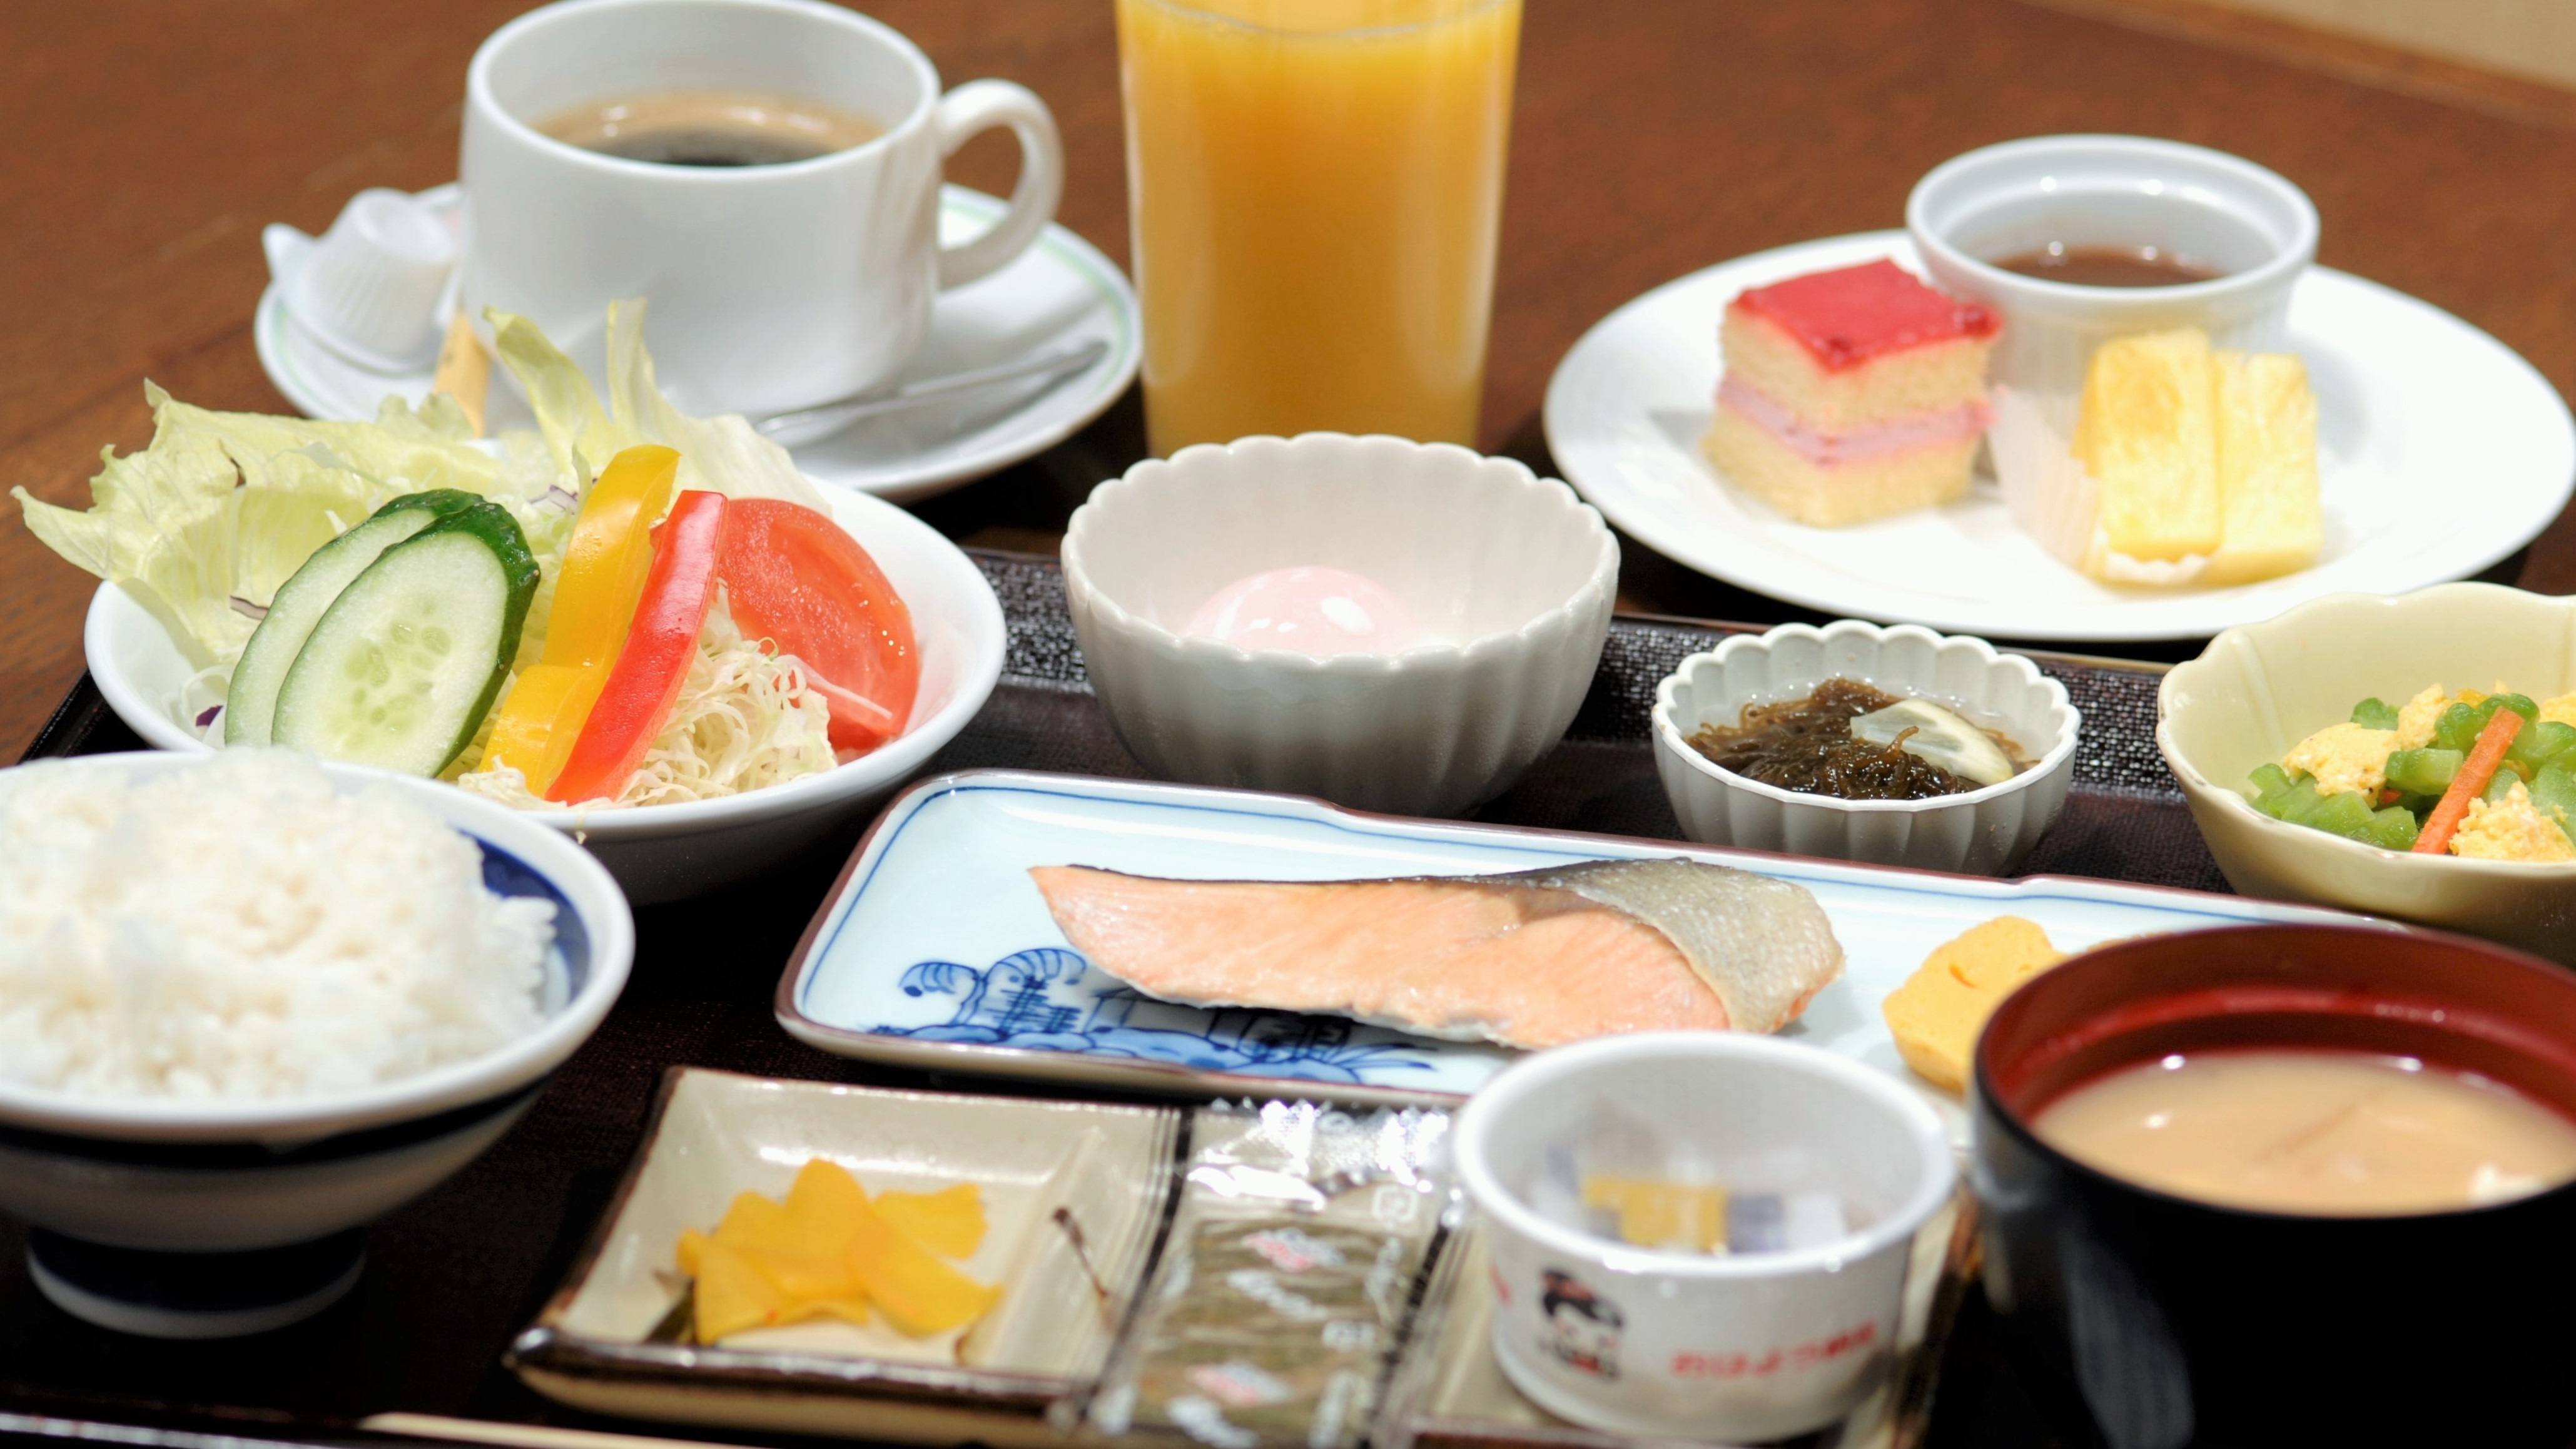 Breakfast set menu (Japanese food) * Image